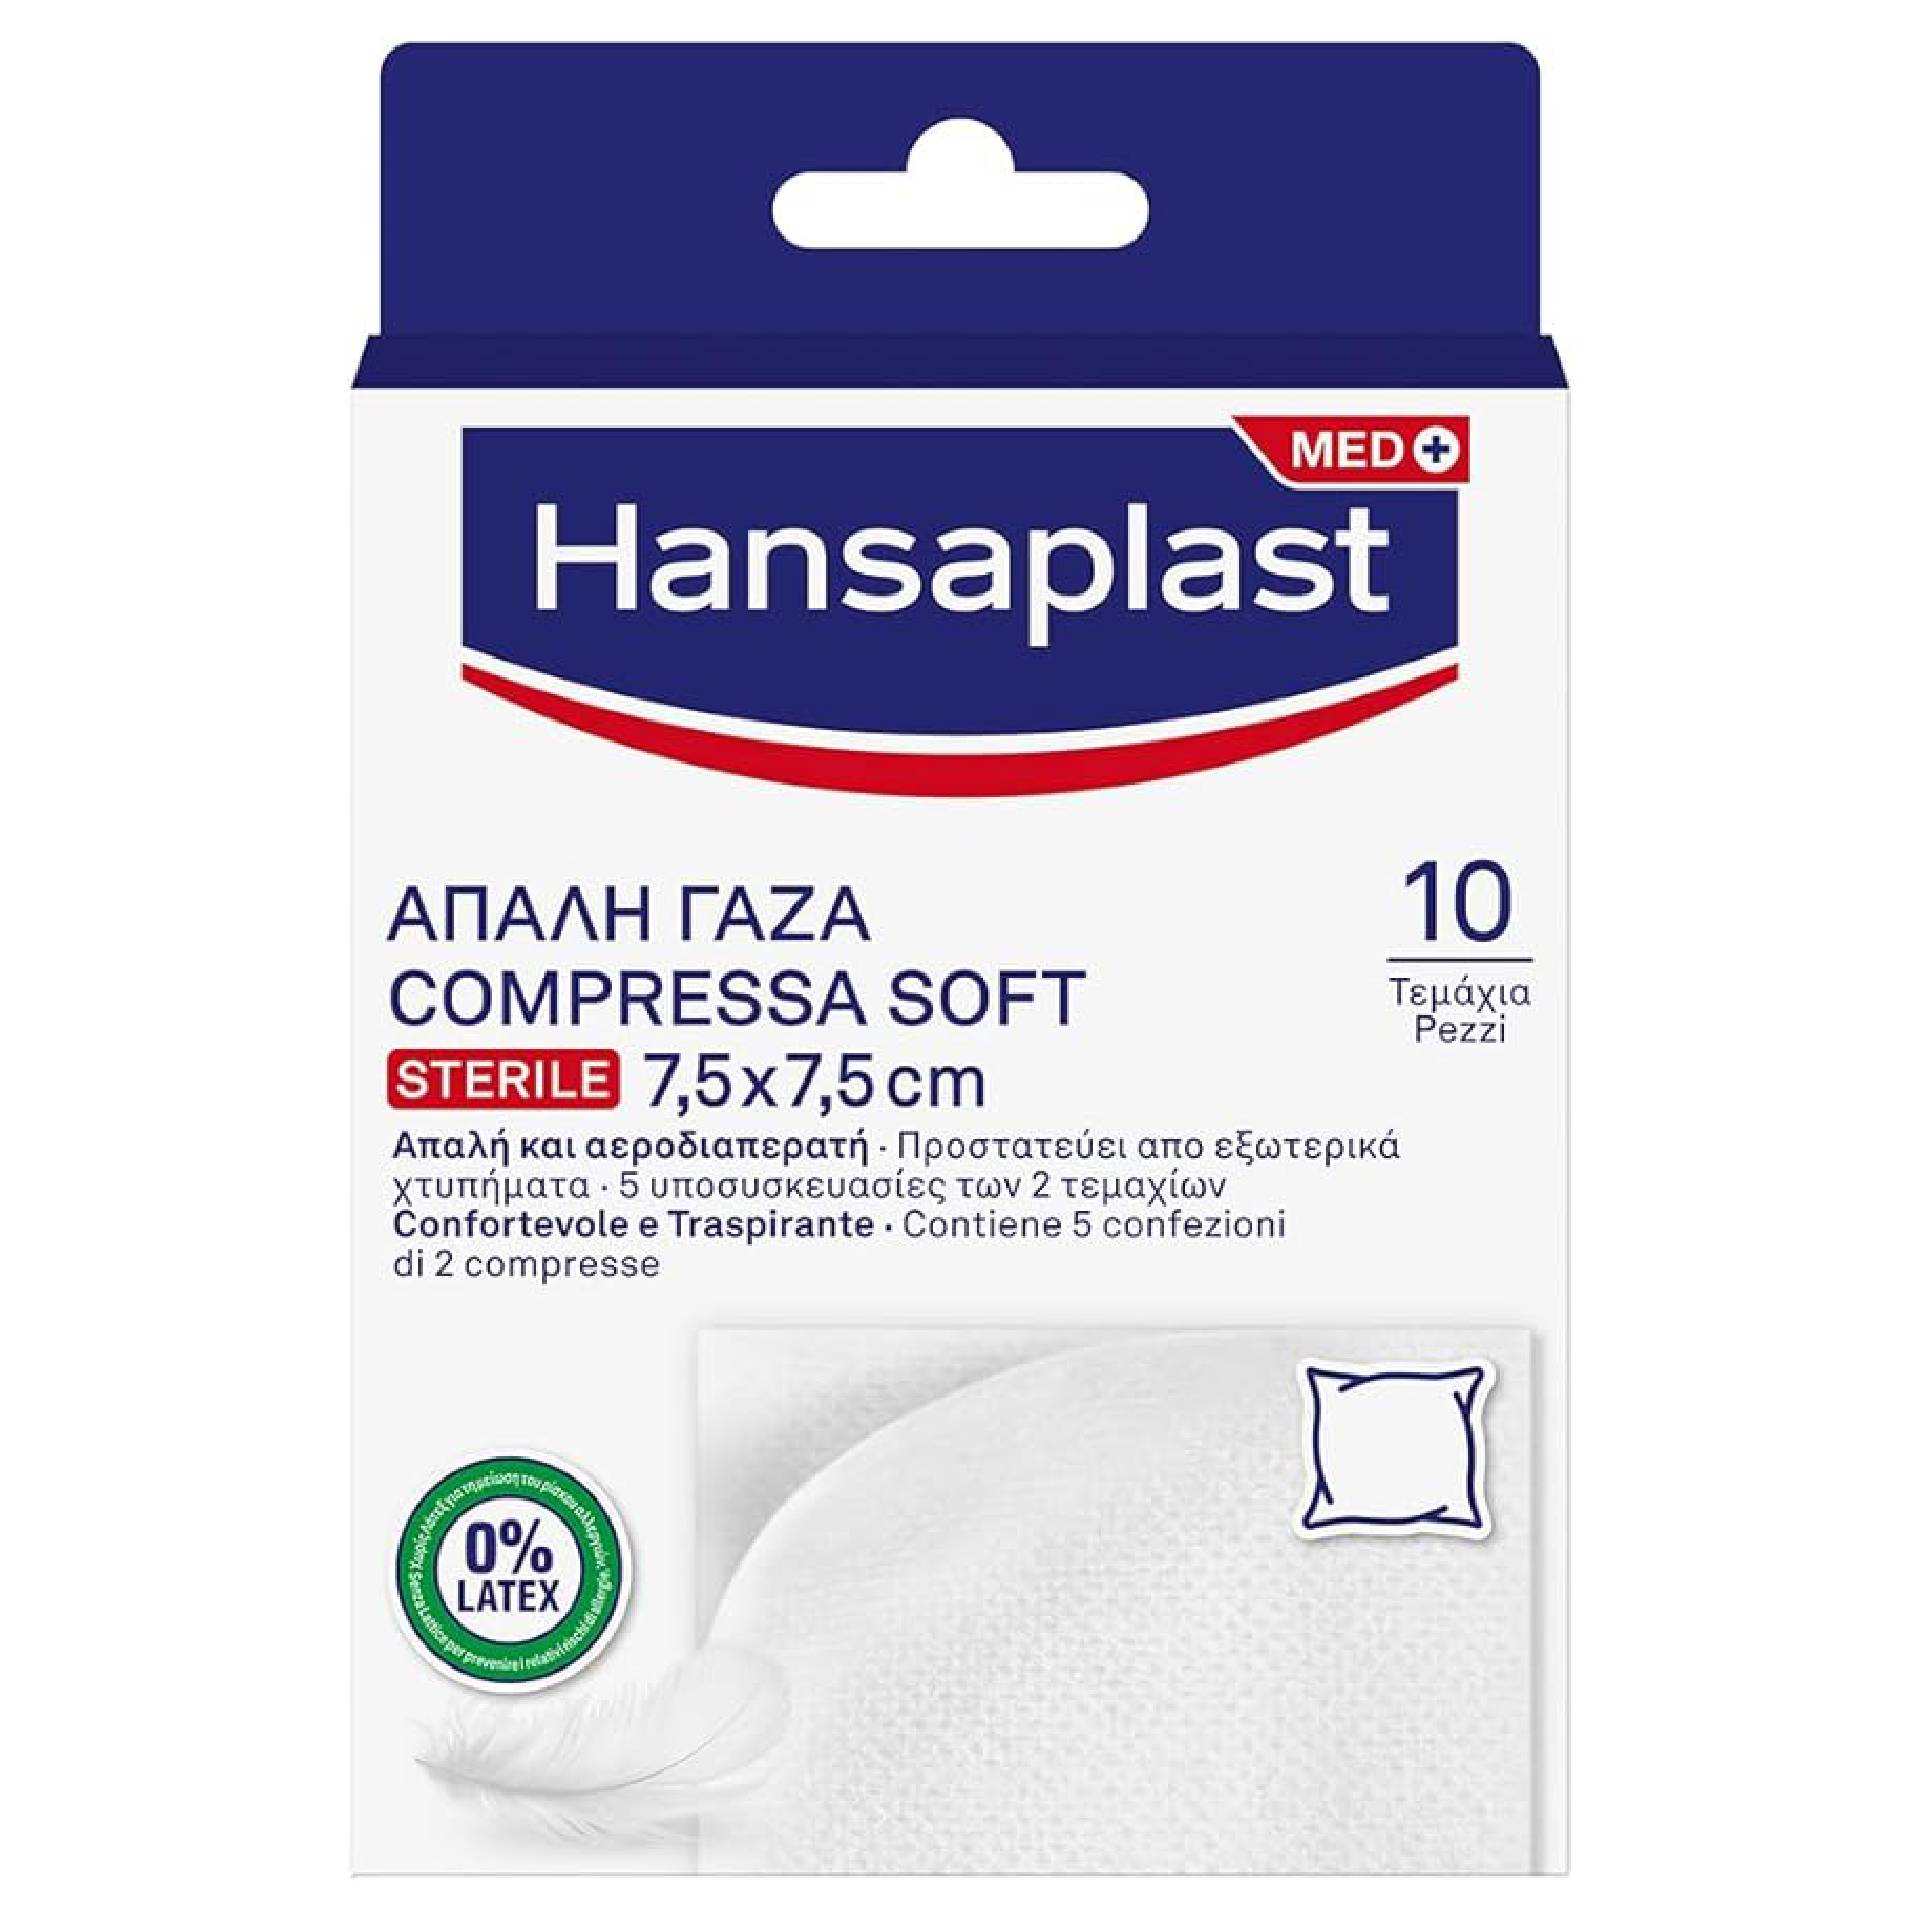 Hansaplast Garza Compressa Soft Sterile 7,5x7,5cm 10 Pezzi